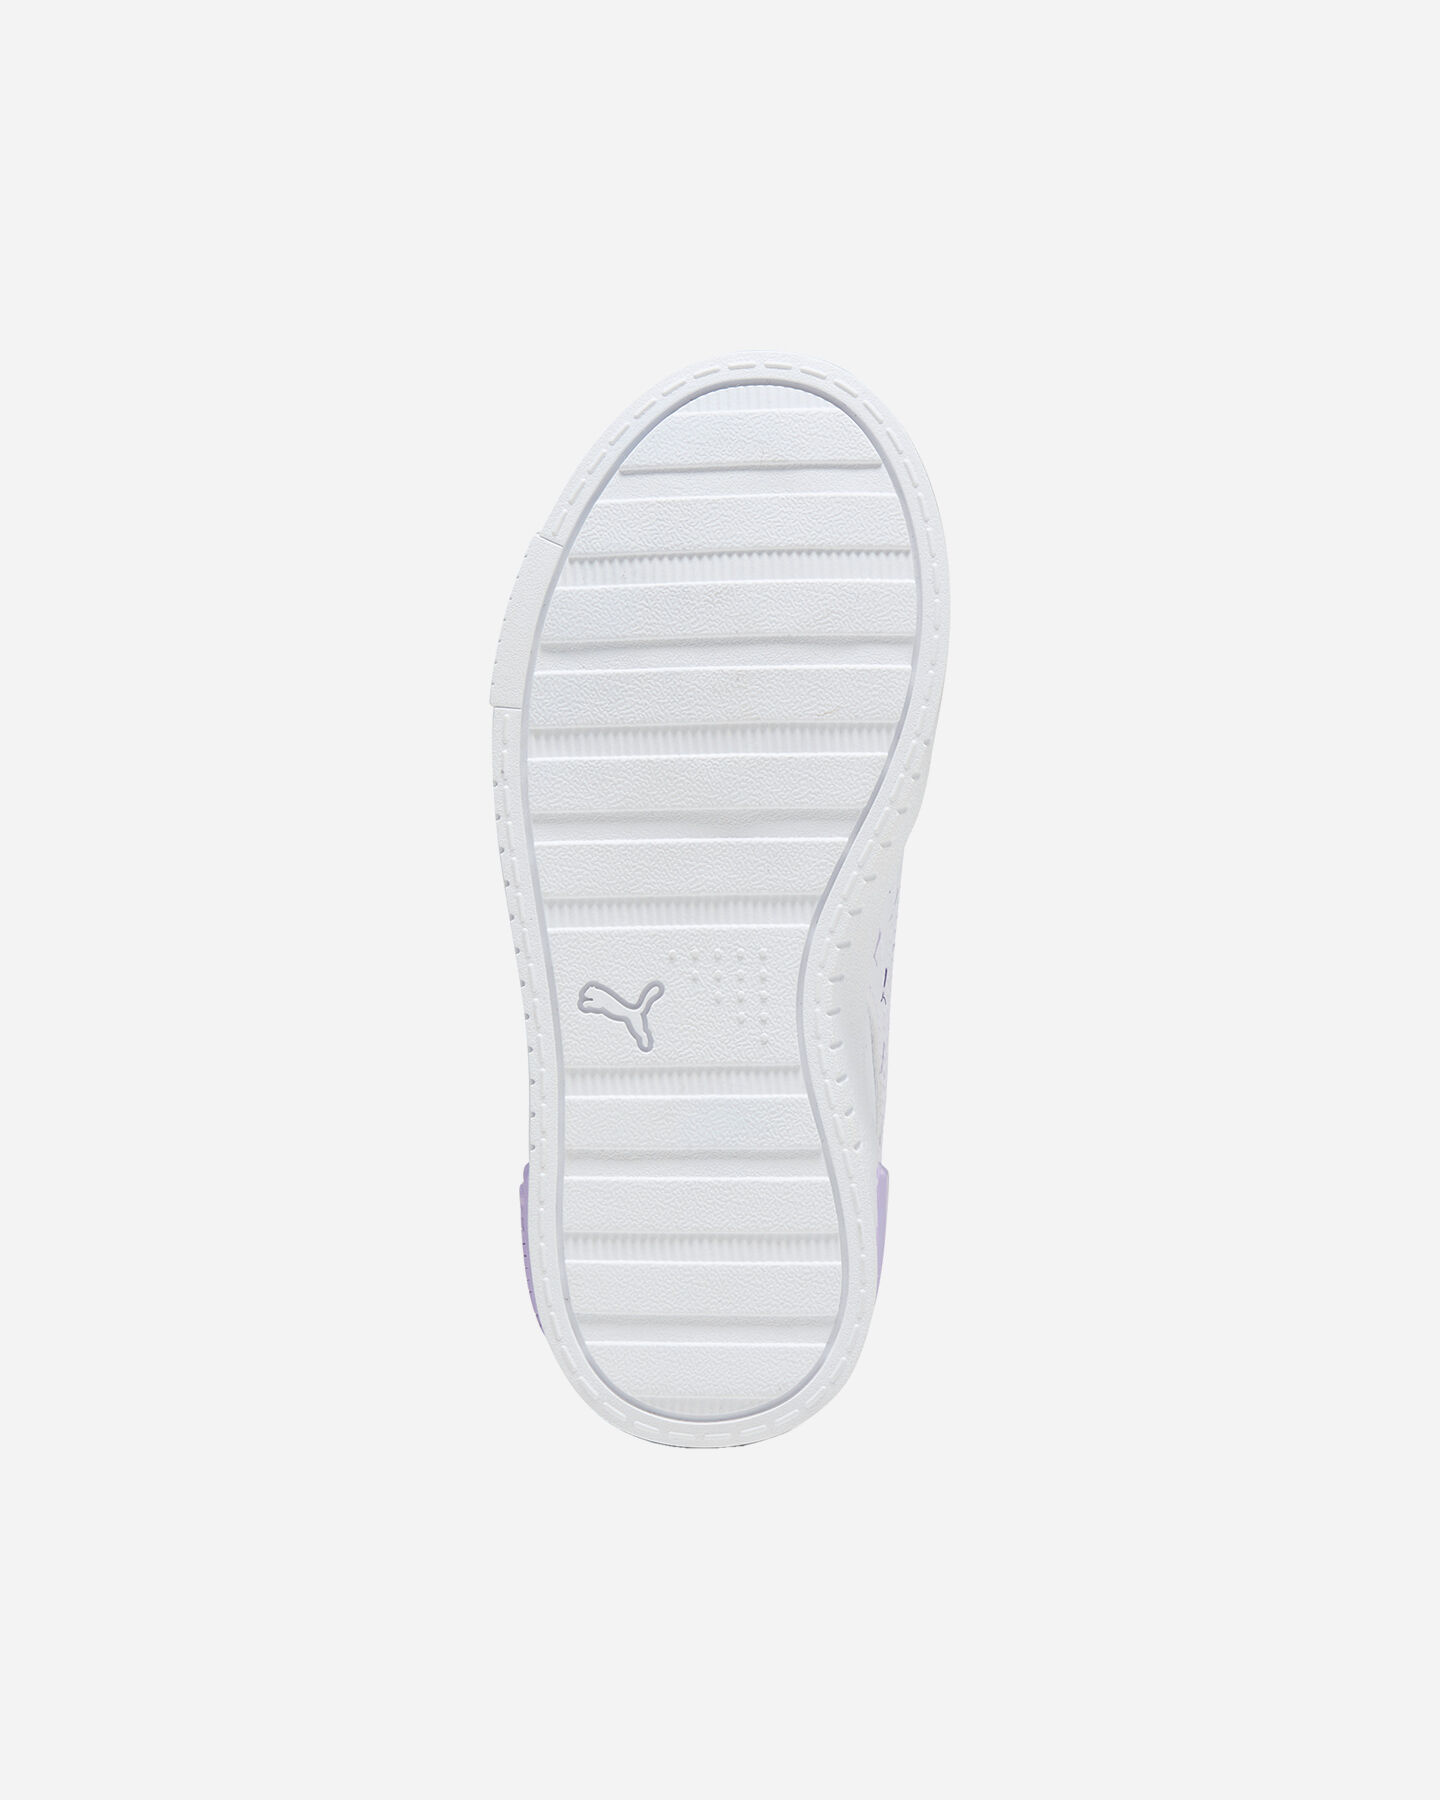  Scarpe sneakers PUMA JADA PS JR S5584912|02|2.5 scatto 2